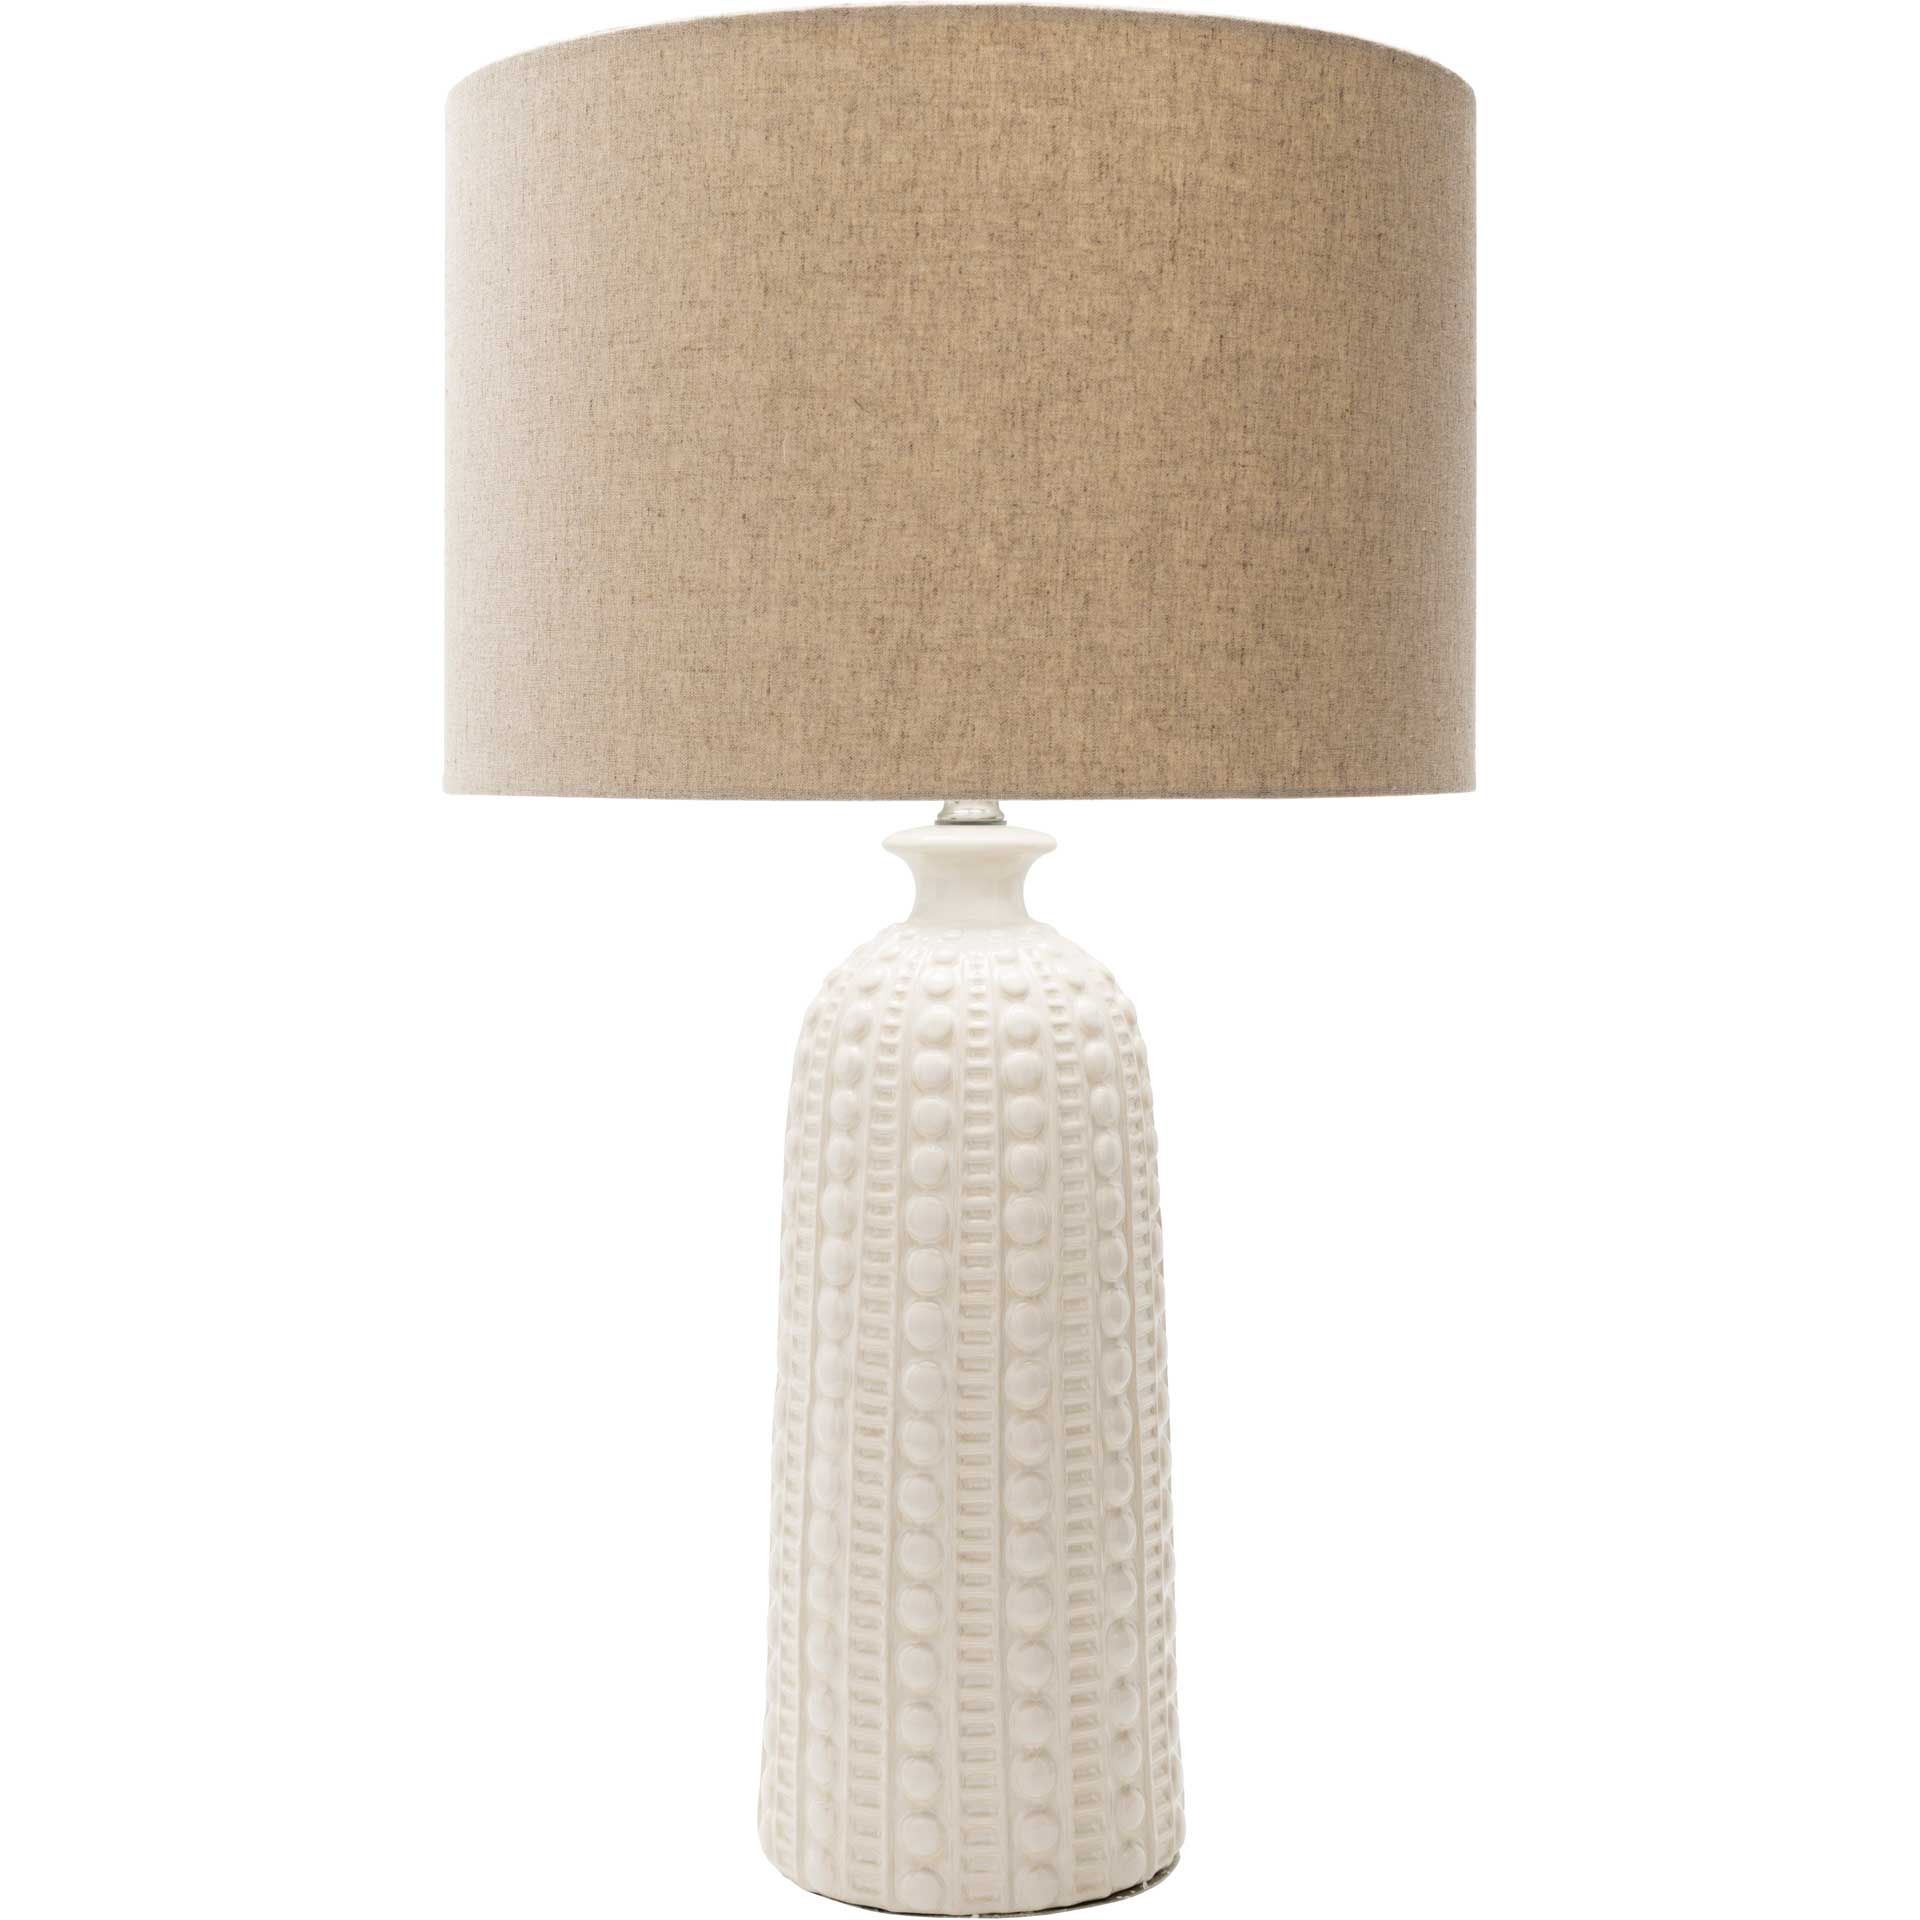 Nelson Table Lamp Camel/White/Ivory